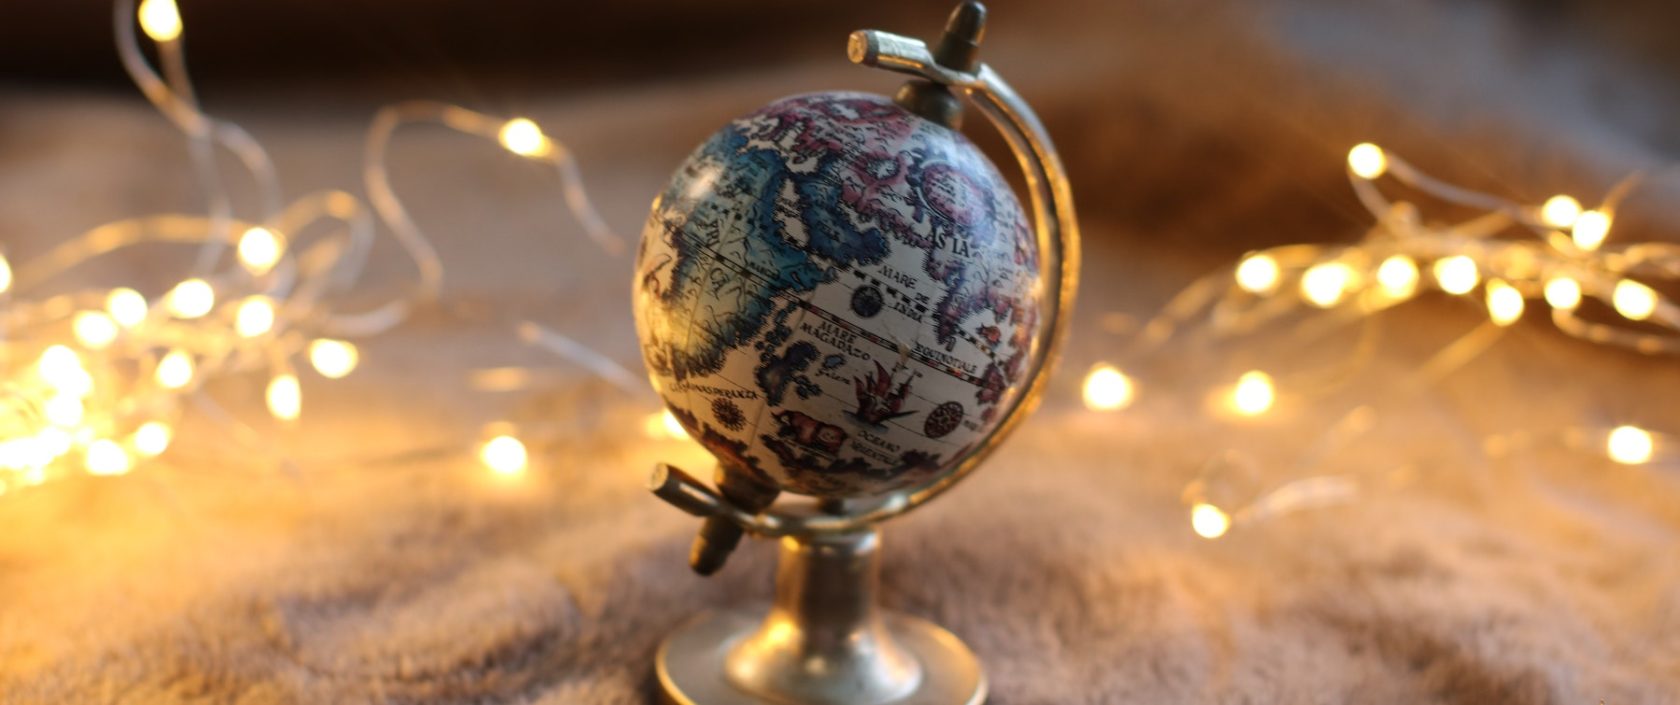 photo of a miniature size globe